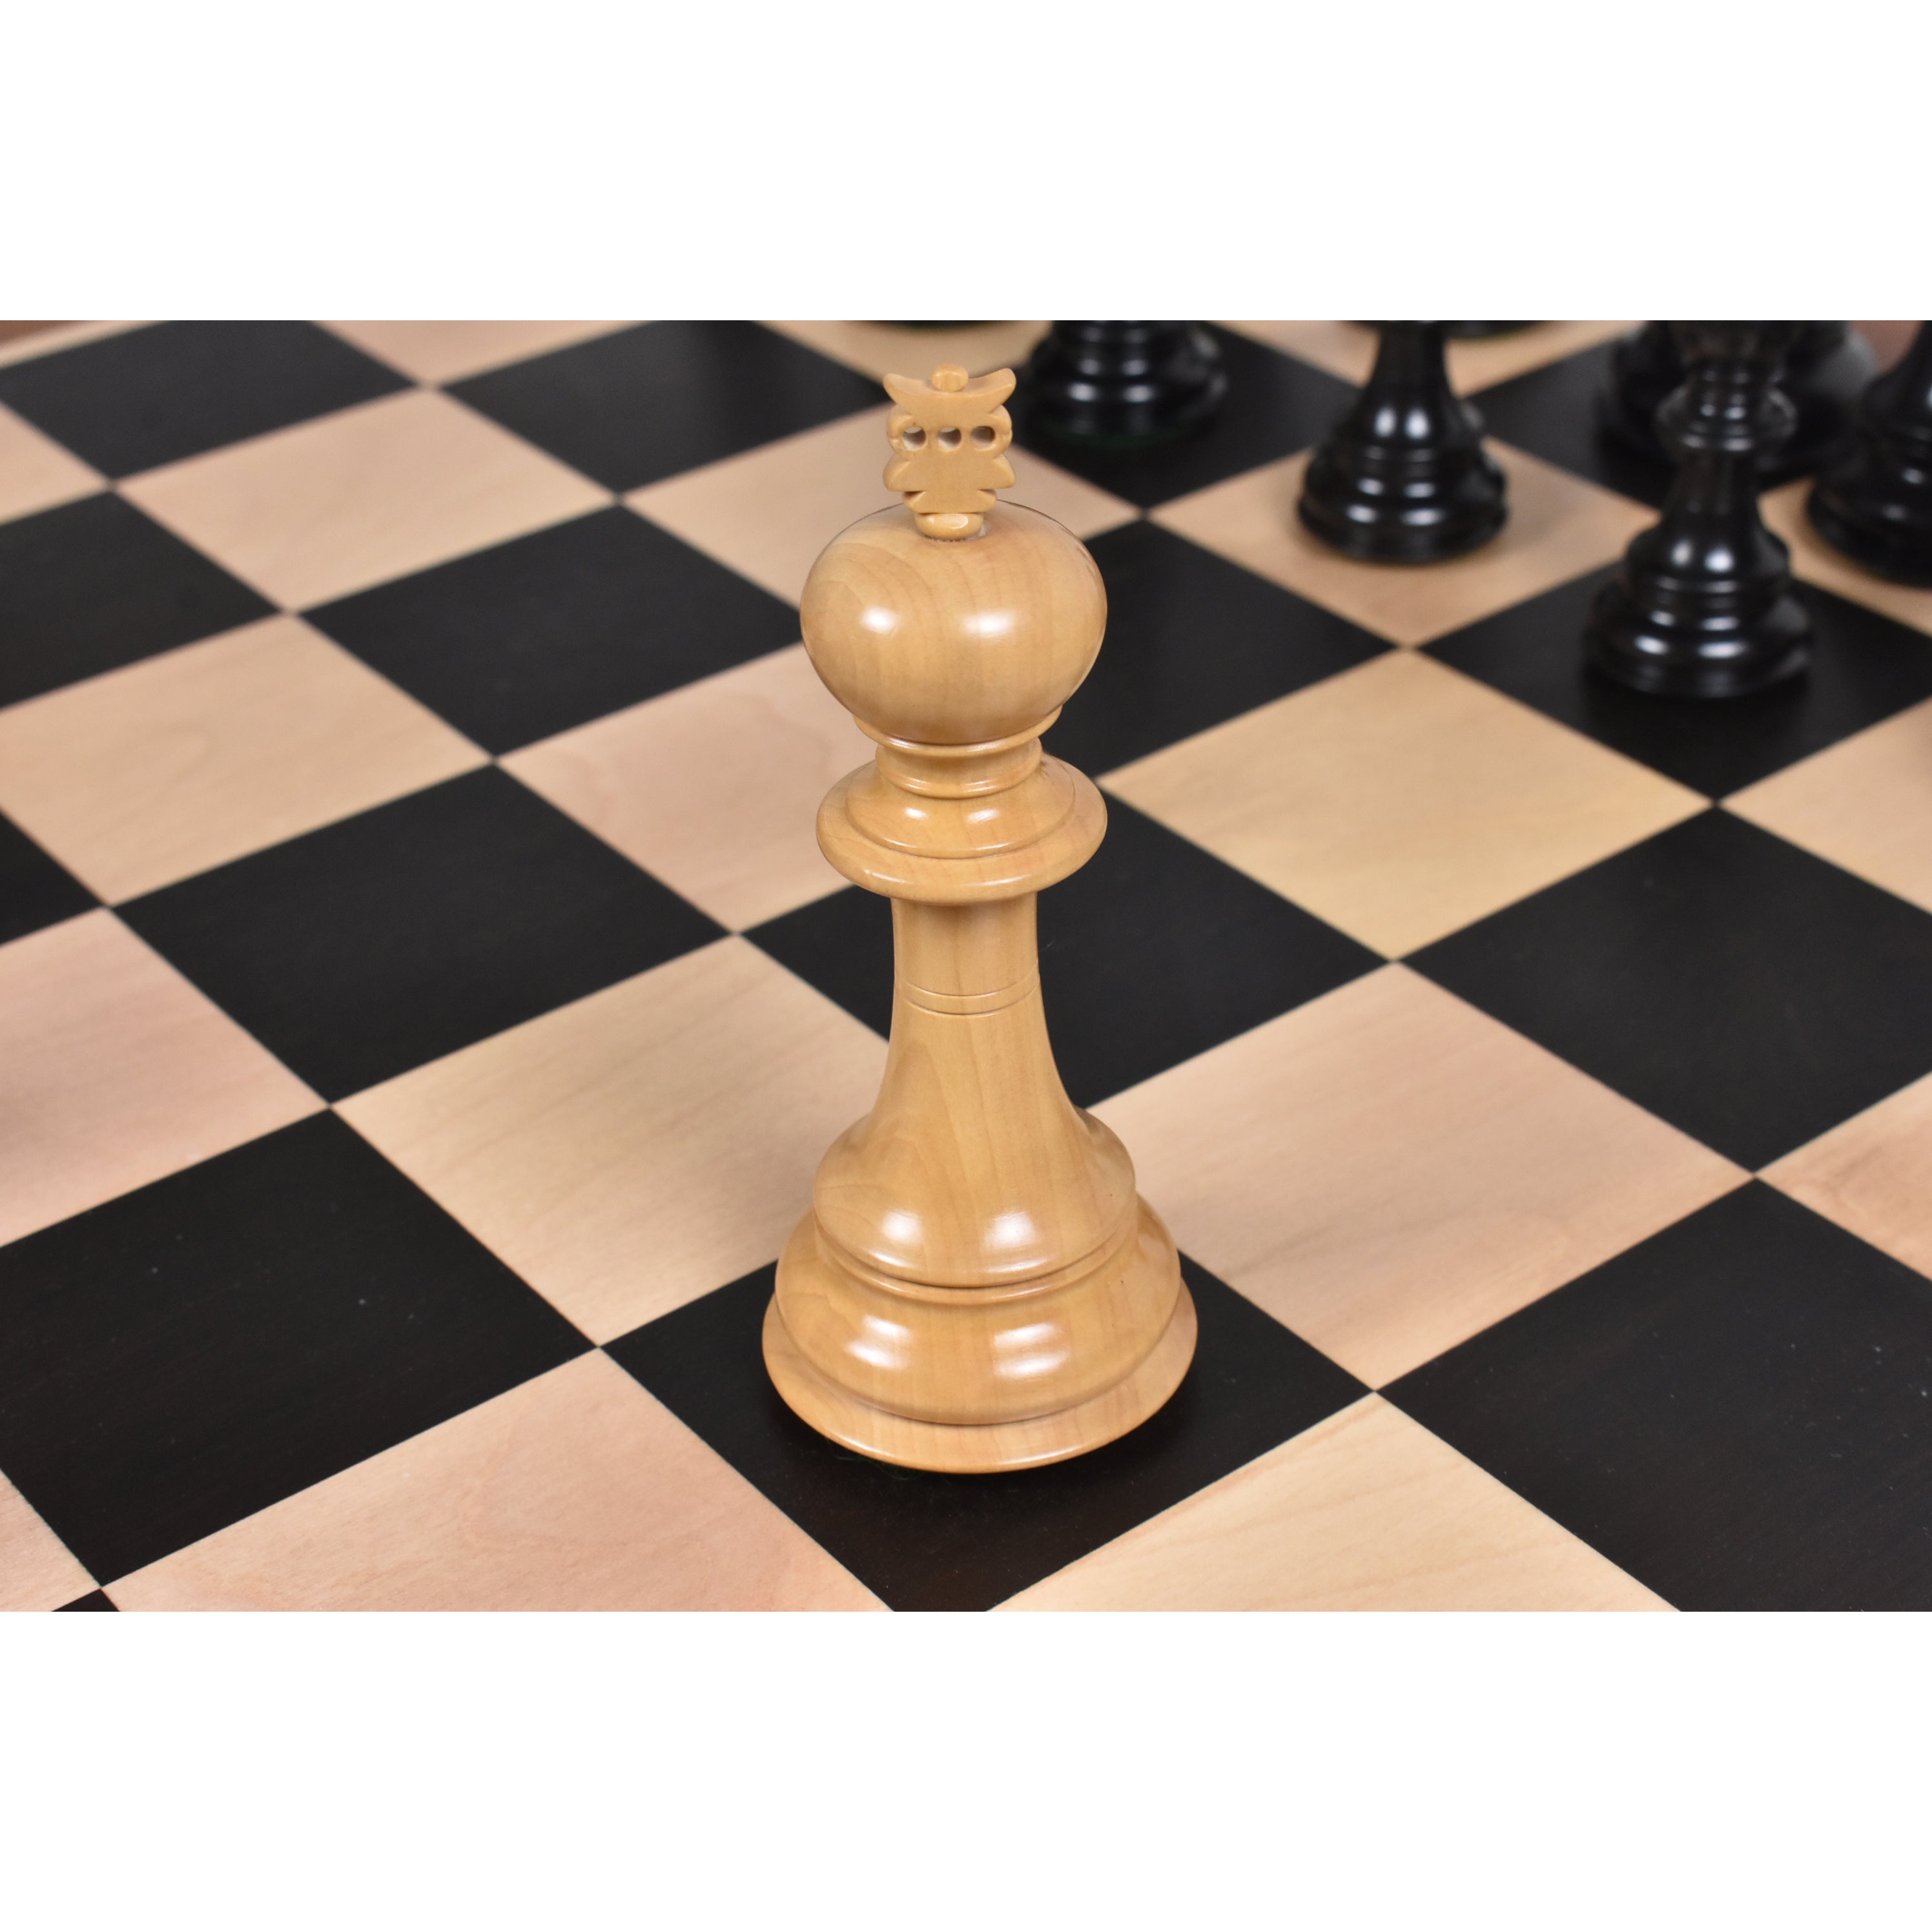 4.2 Rare American Staunton Luxury Chess Pieces Set - Triple